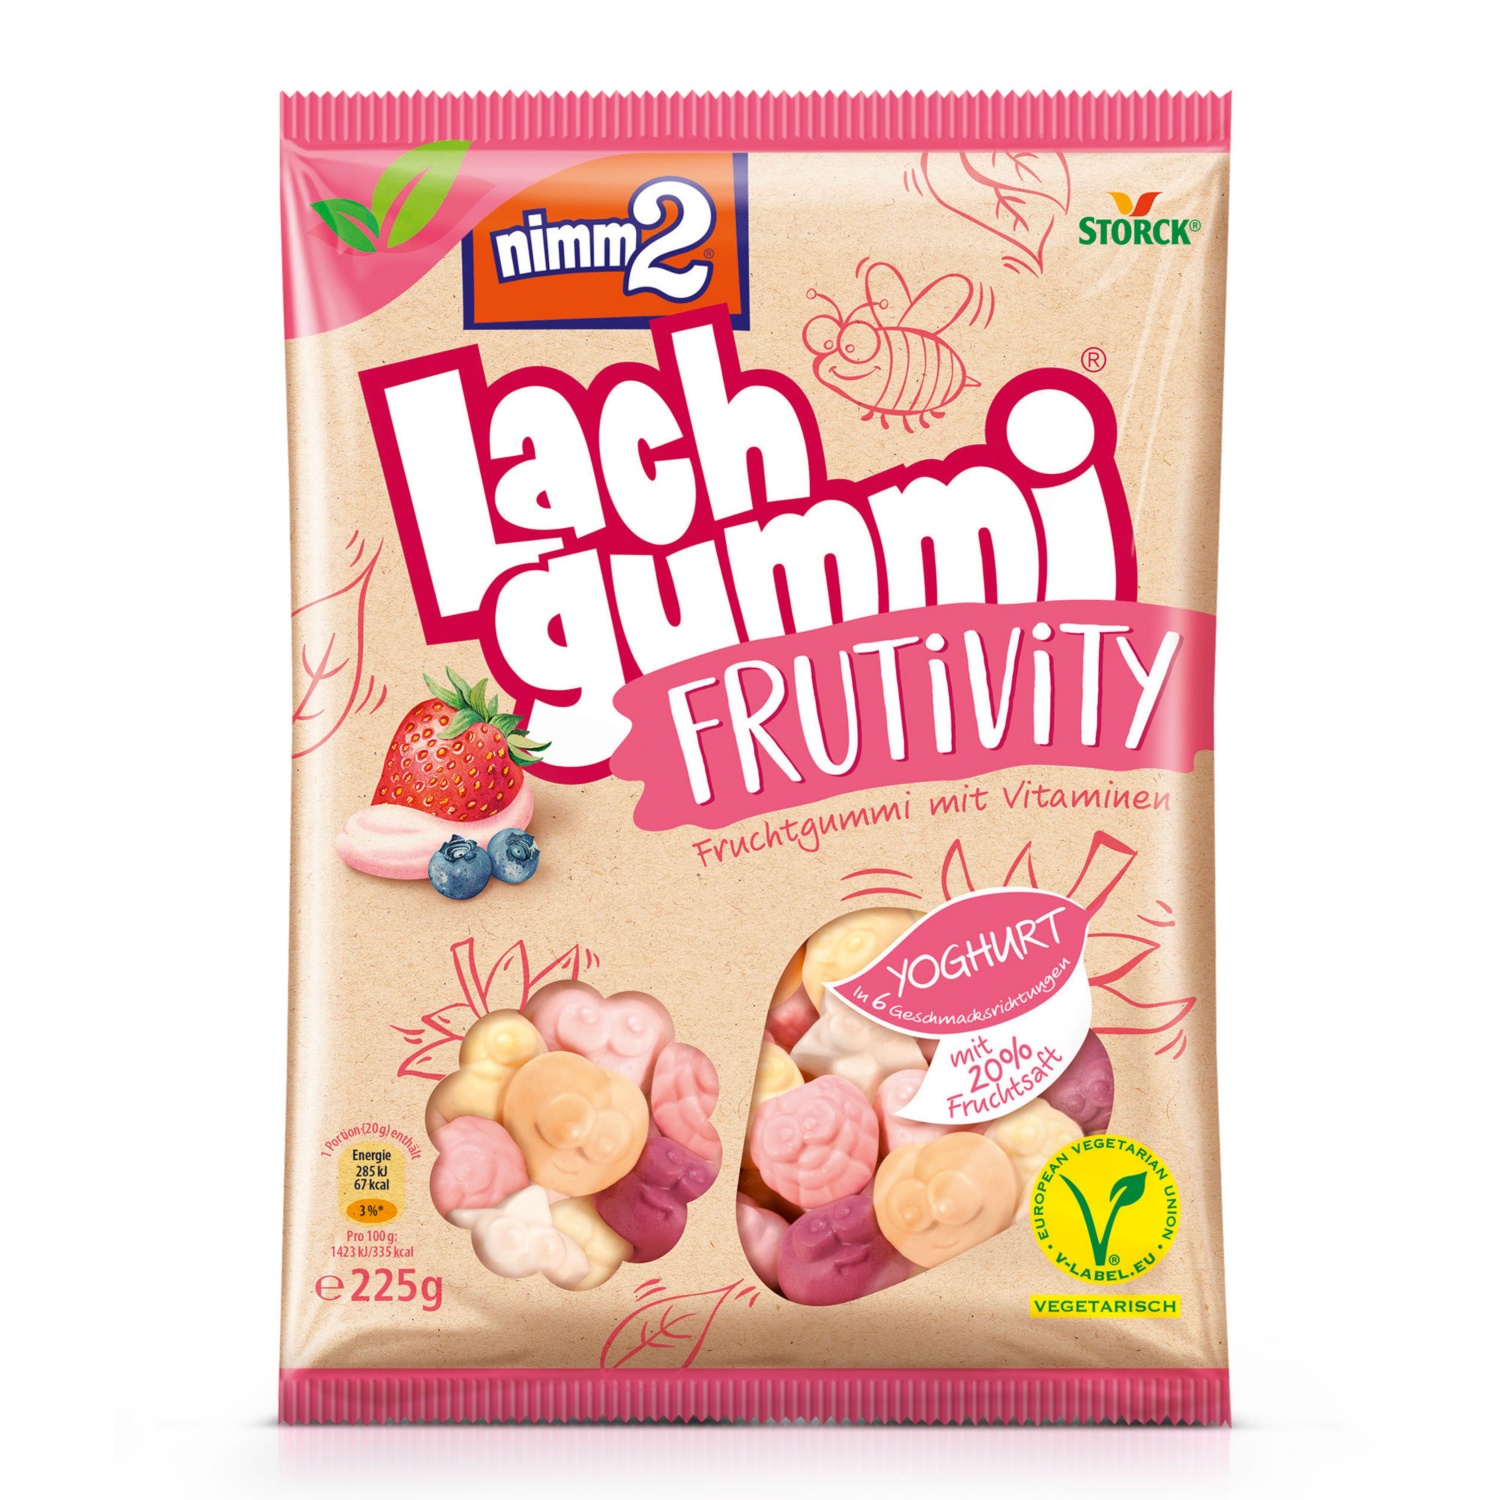 NIMM 2 Lachgummi Frutivity, Yoghurt